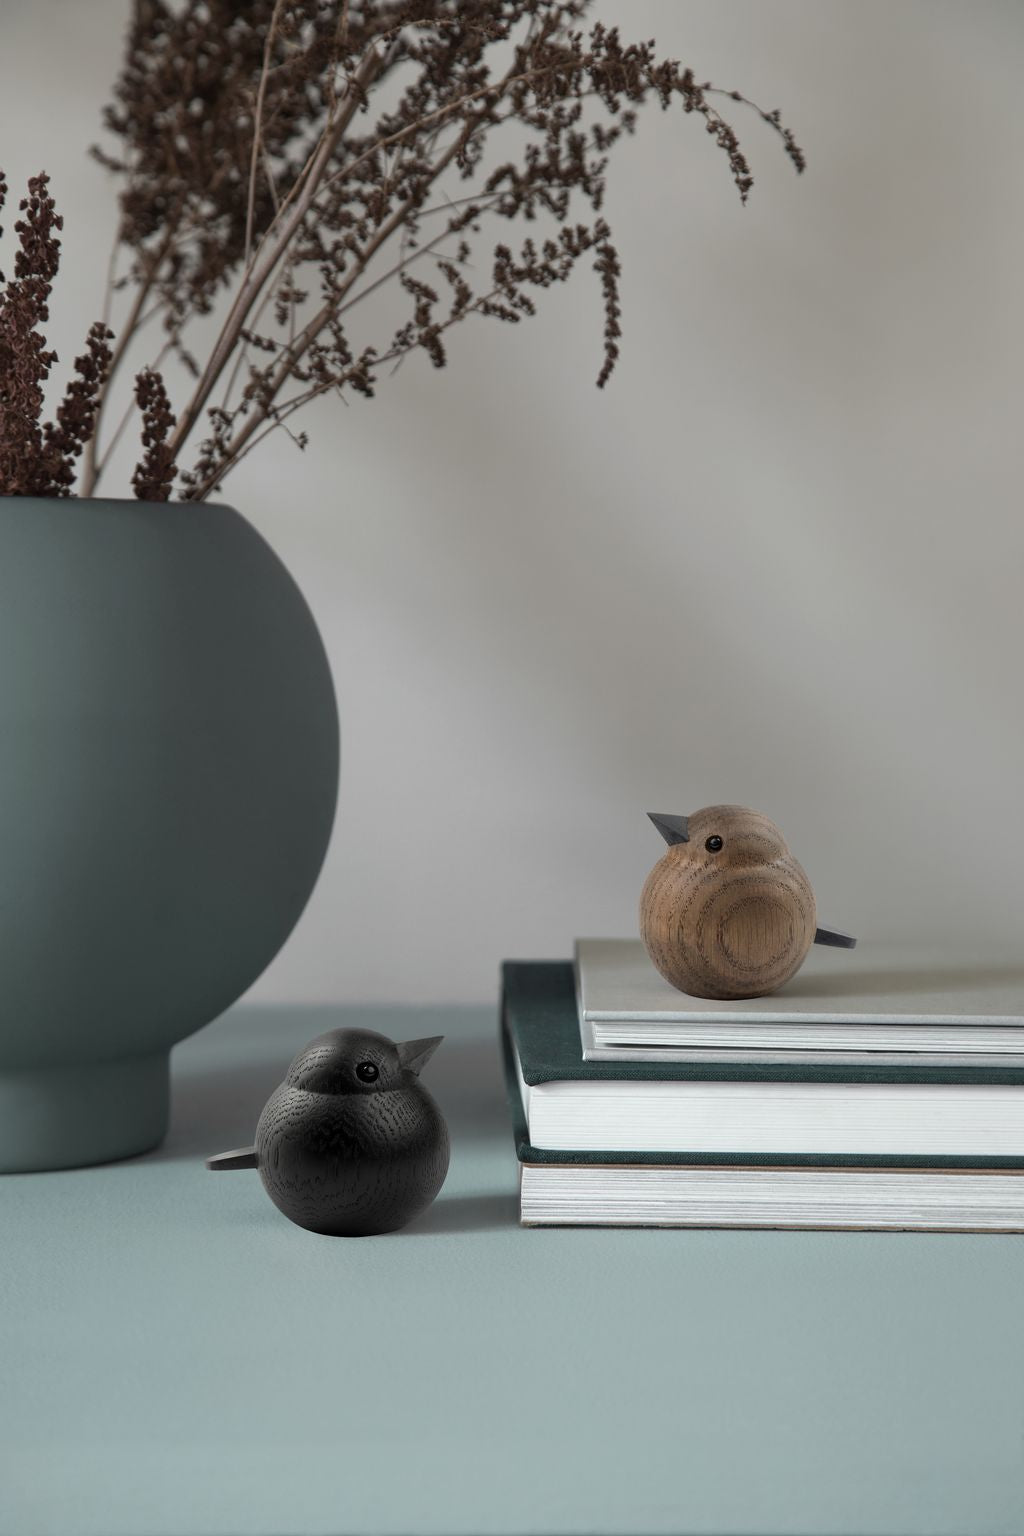 Design novoform Mama Sparrow Figura decorativa, quercia macchiata nera